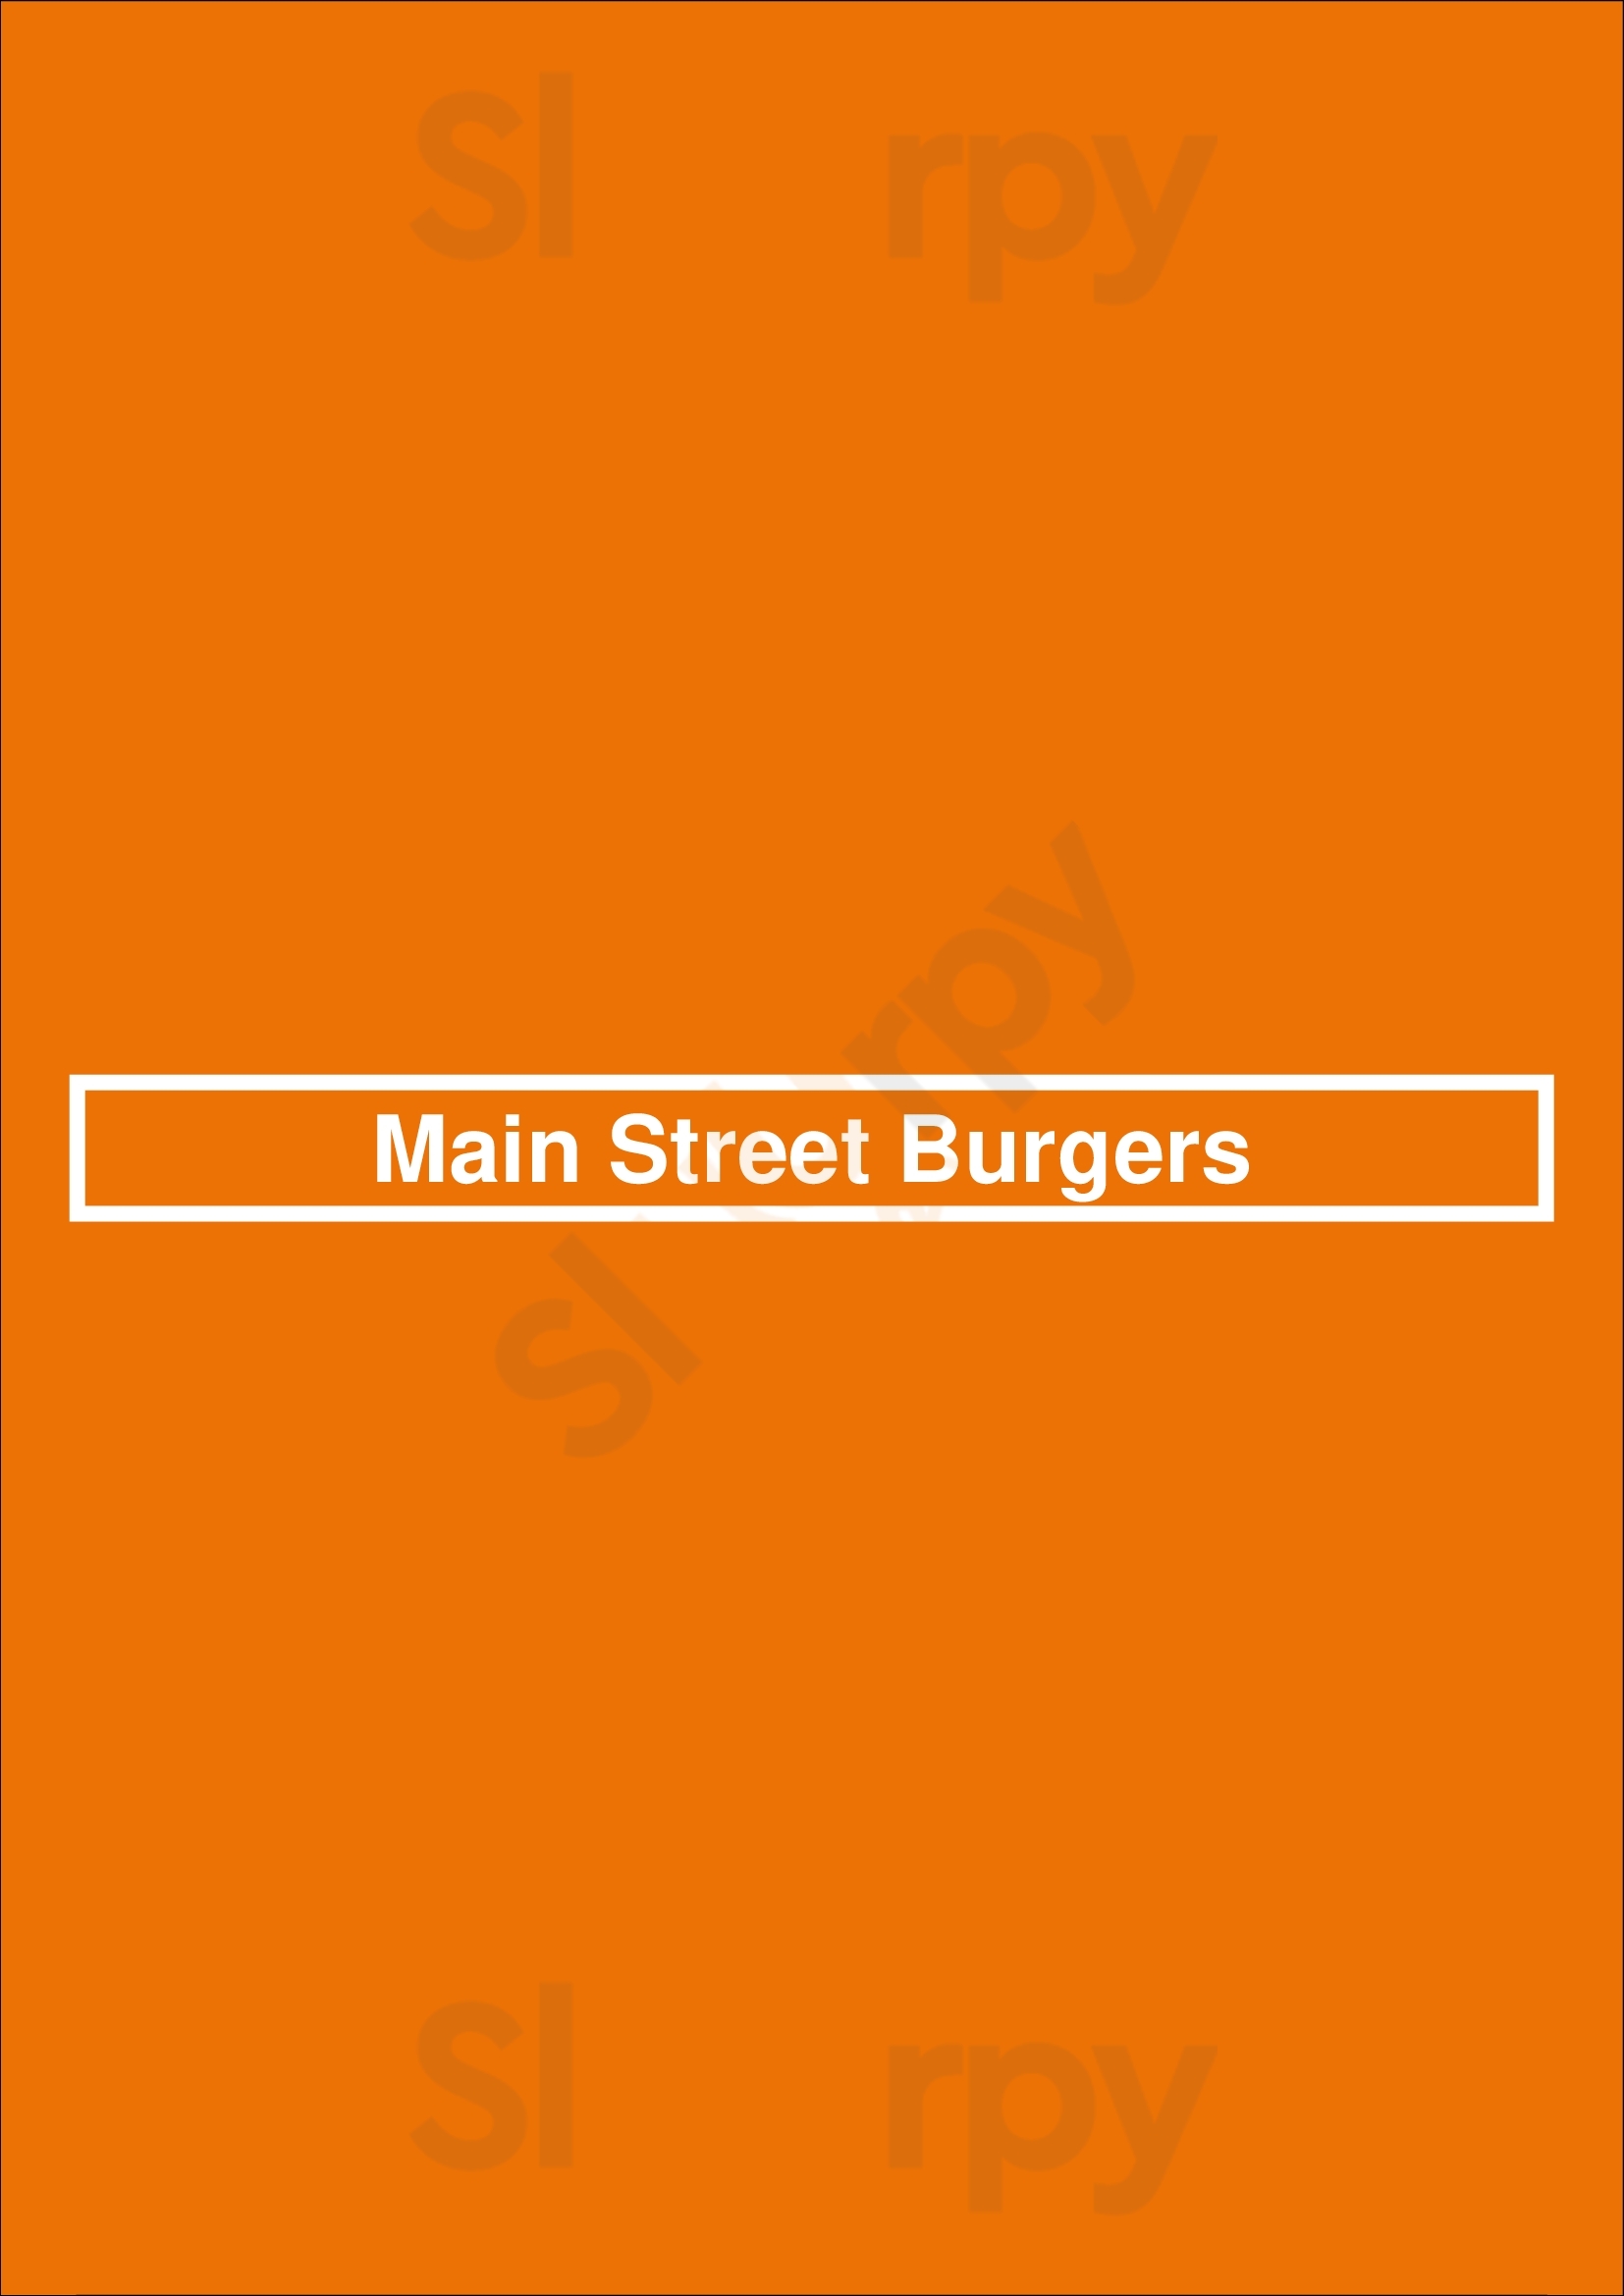 Main Street Burgers San Jose Menu - 1